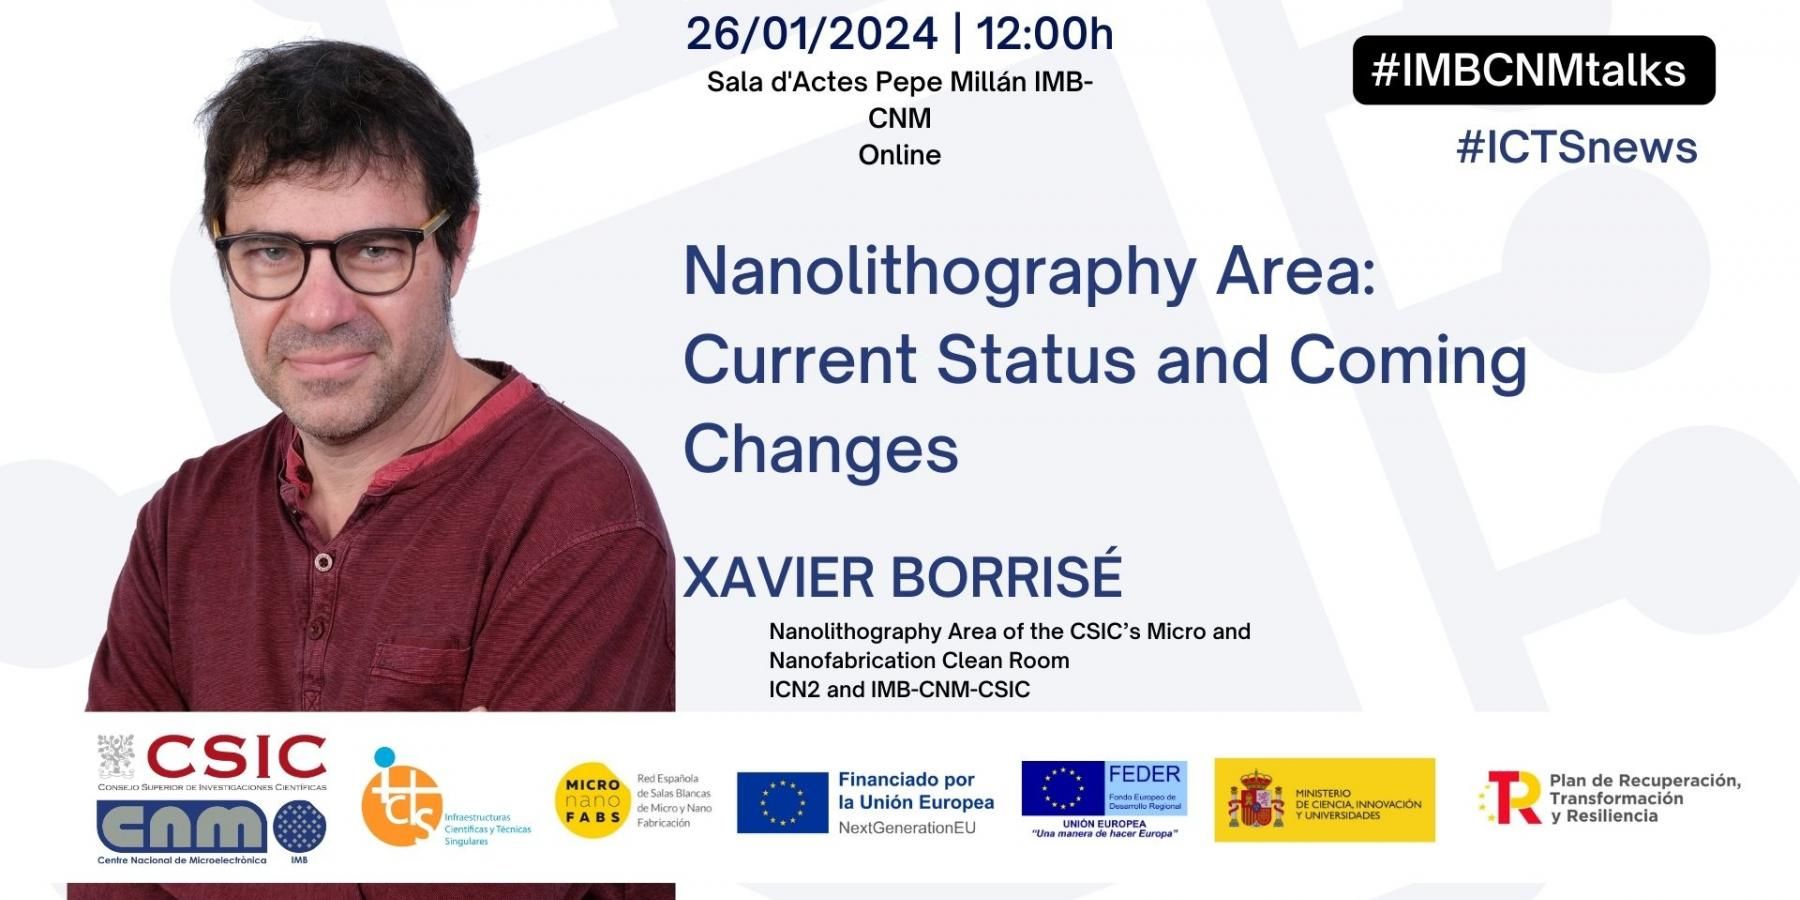 Nanolithography IMB-CNM Talk by Xavier Borrisé on 26/01/2024